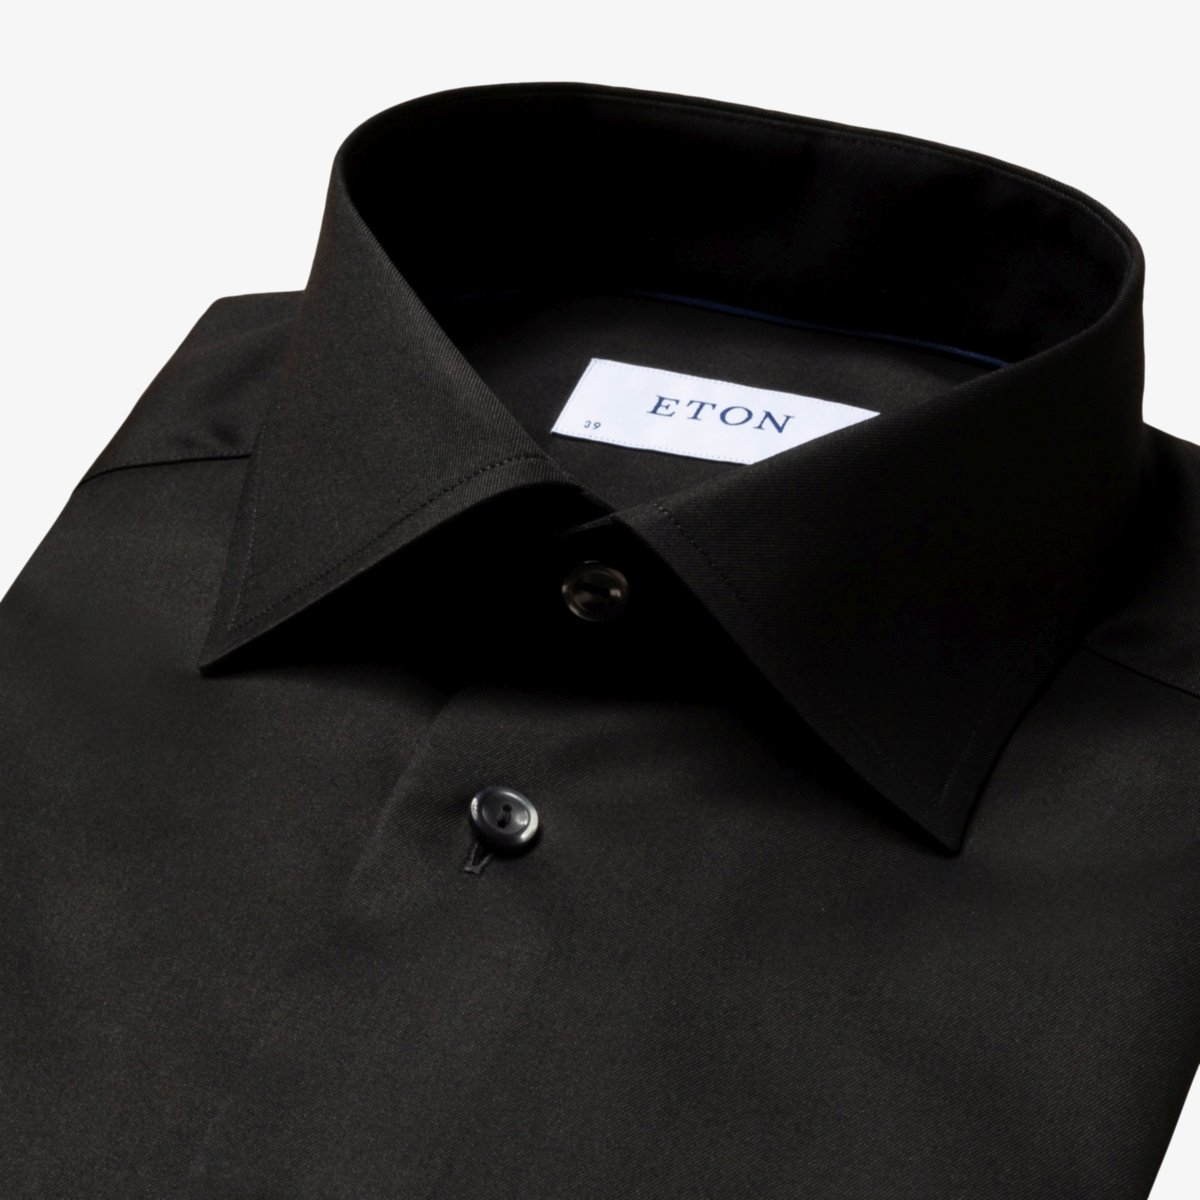 Eton black slim fit signature twill men's dress shirt